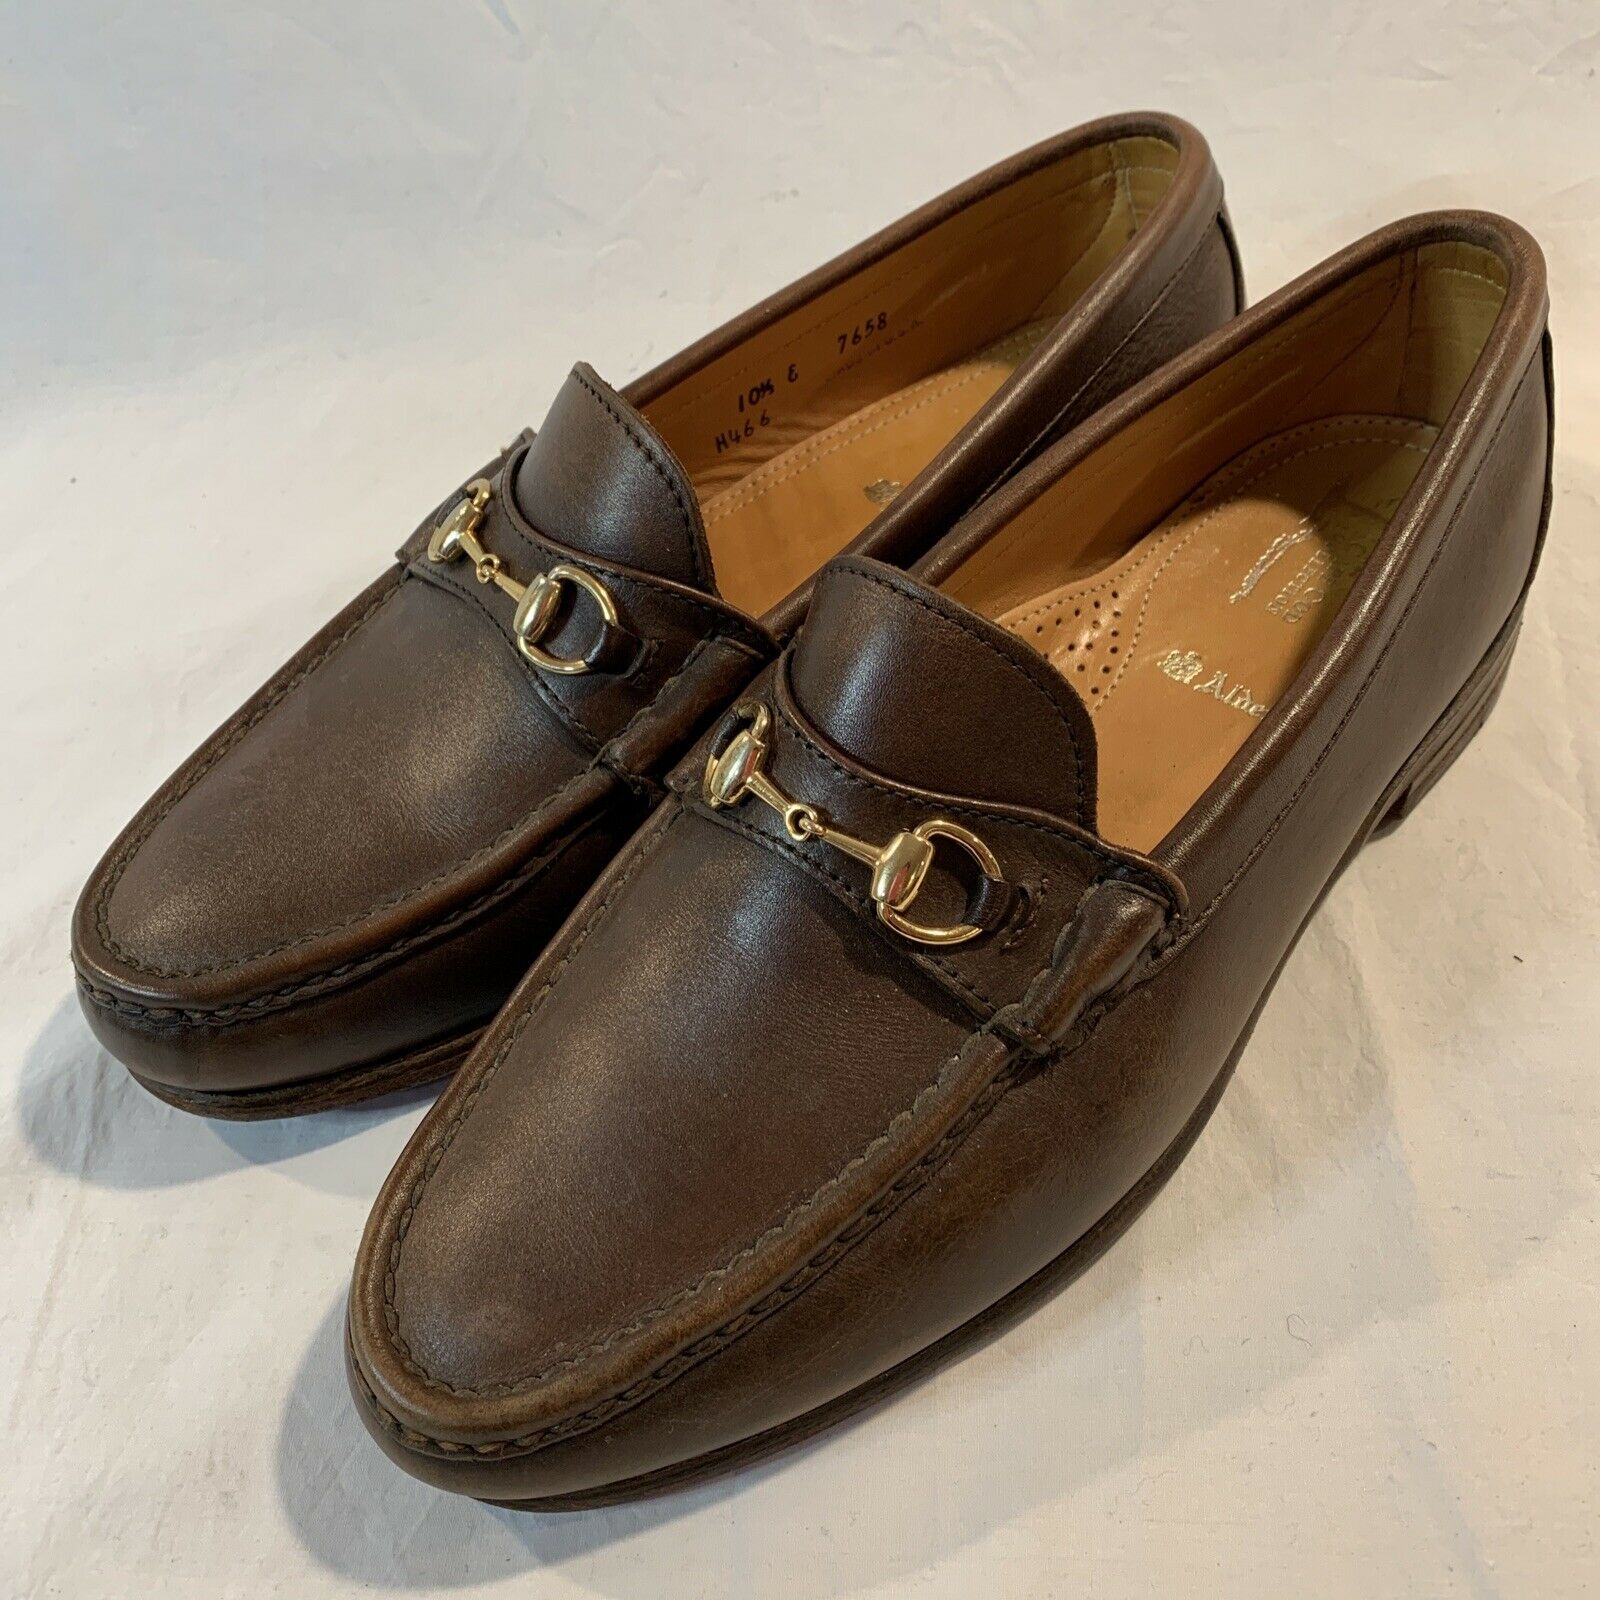 Alden Men's Shoes Loafer H466 Horsebit Cape Code Dark Brown Leather Size10.5 E